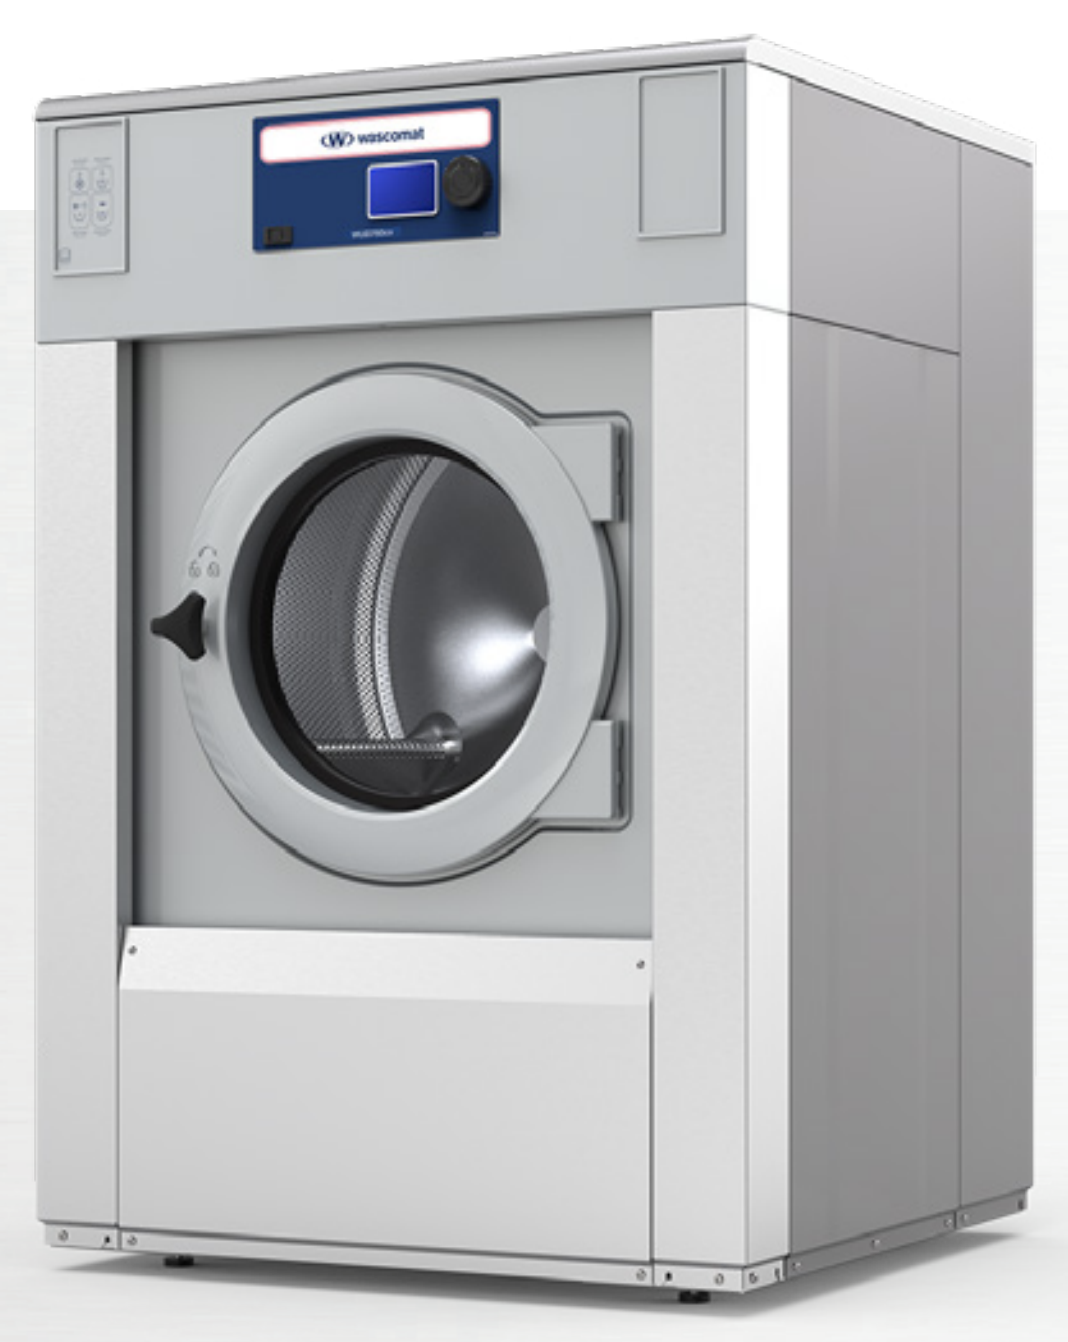 New 2022 Wascomat Wud760 Opl - Cardinal Laundry Equipment Co